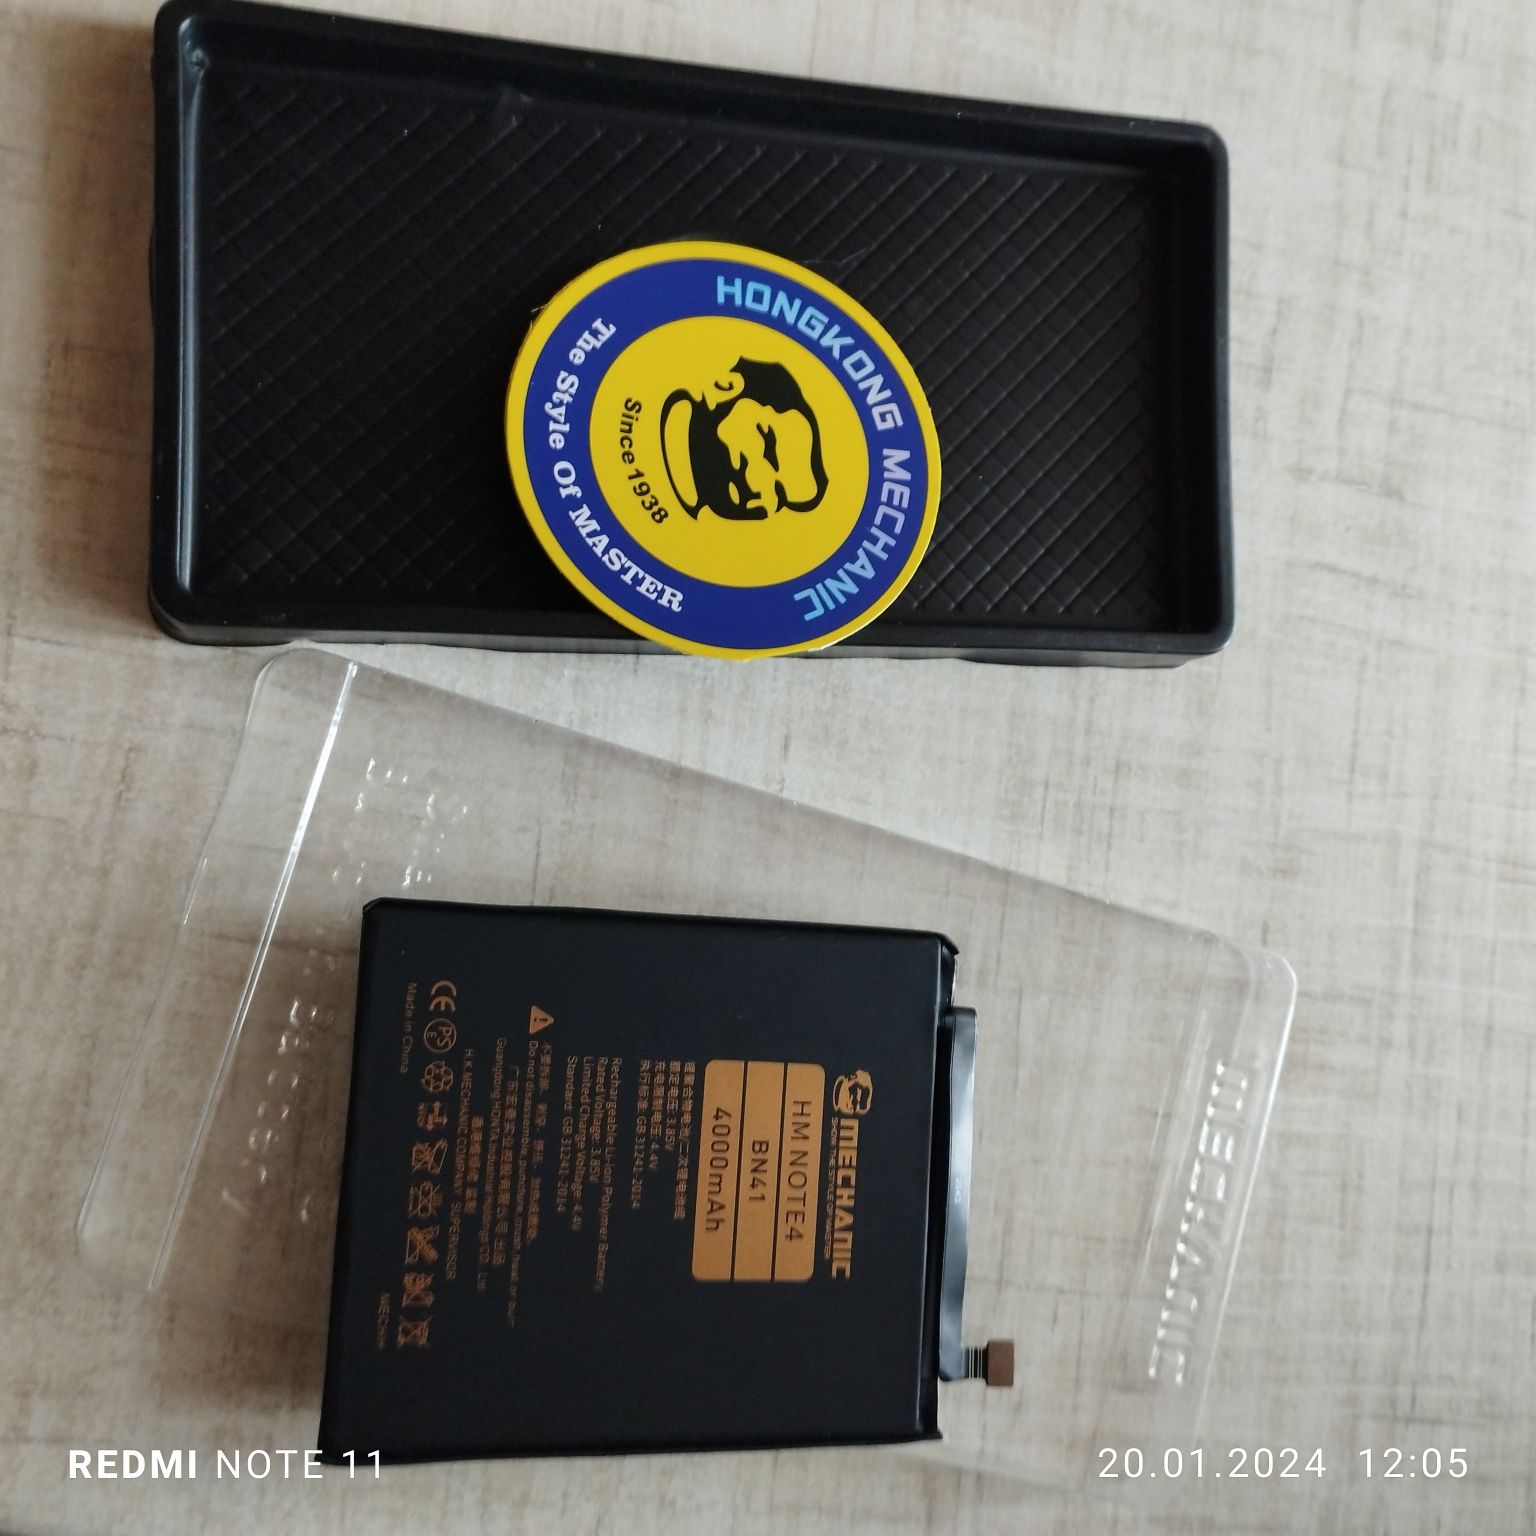 Аккумулятор для Xiaomi redmi note 4 bn41 новый